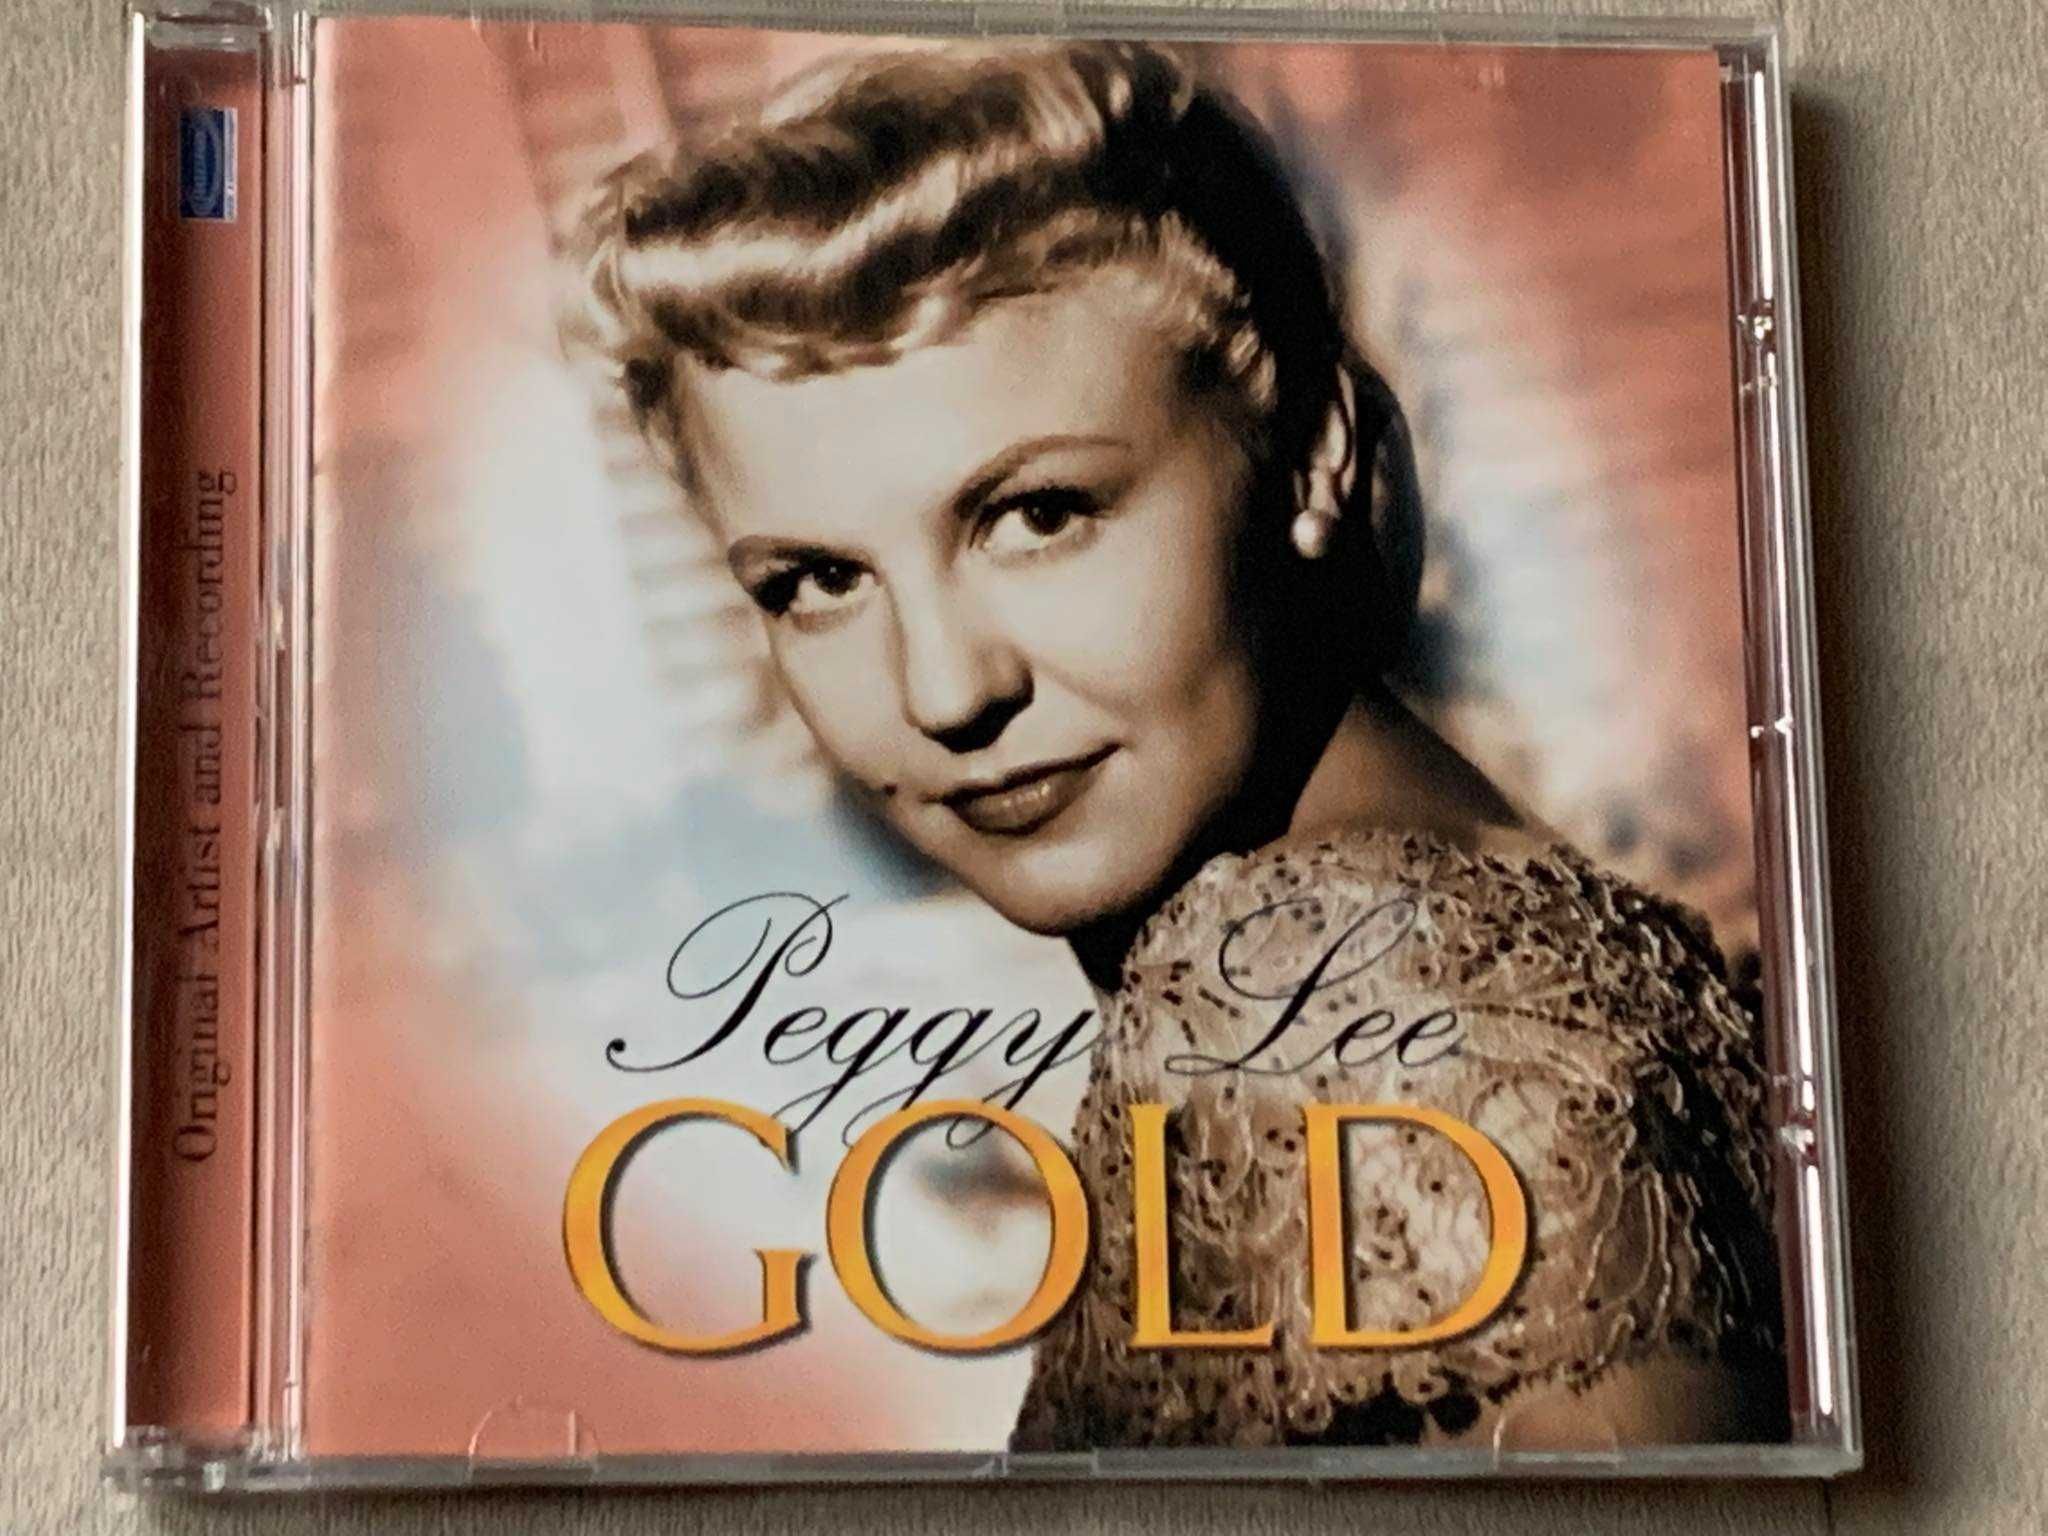 Peggy Lee - Gold - CD - 2005r. - jak NOWA! UNIKAT